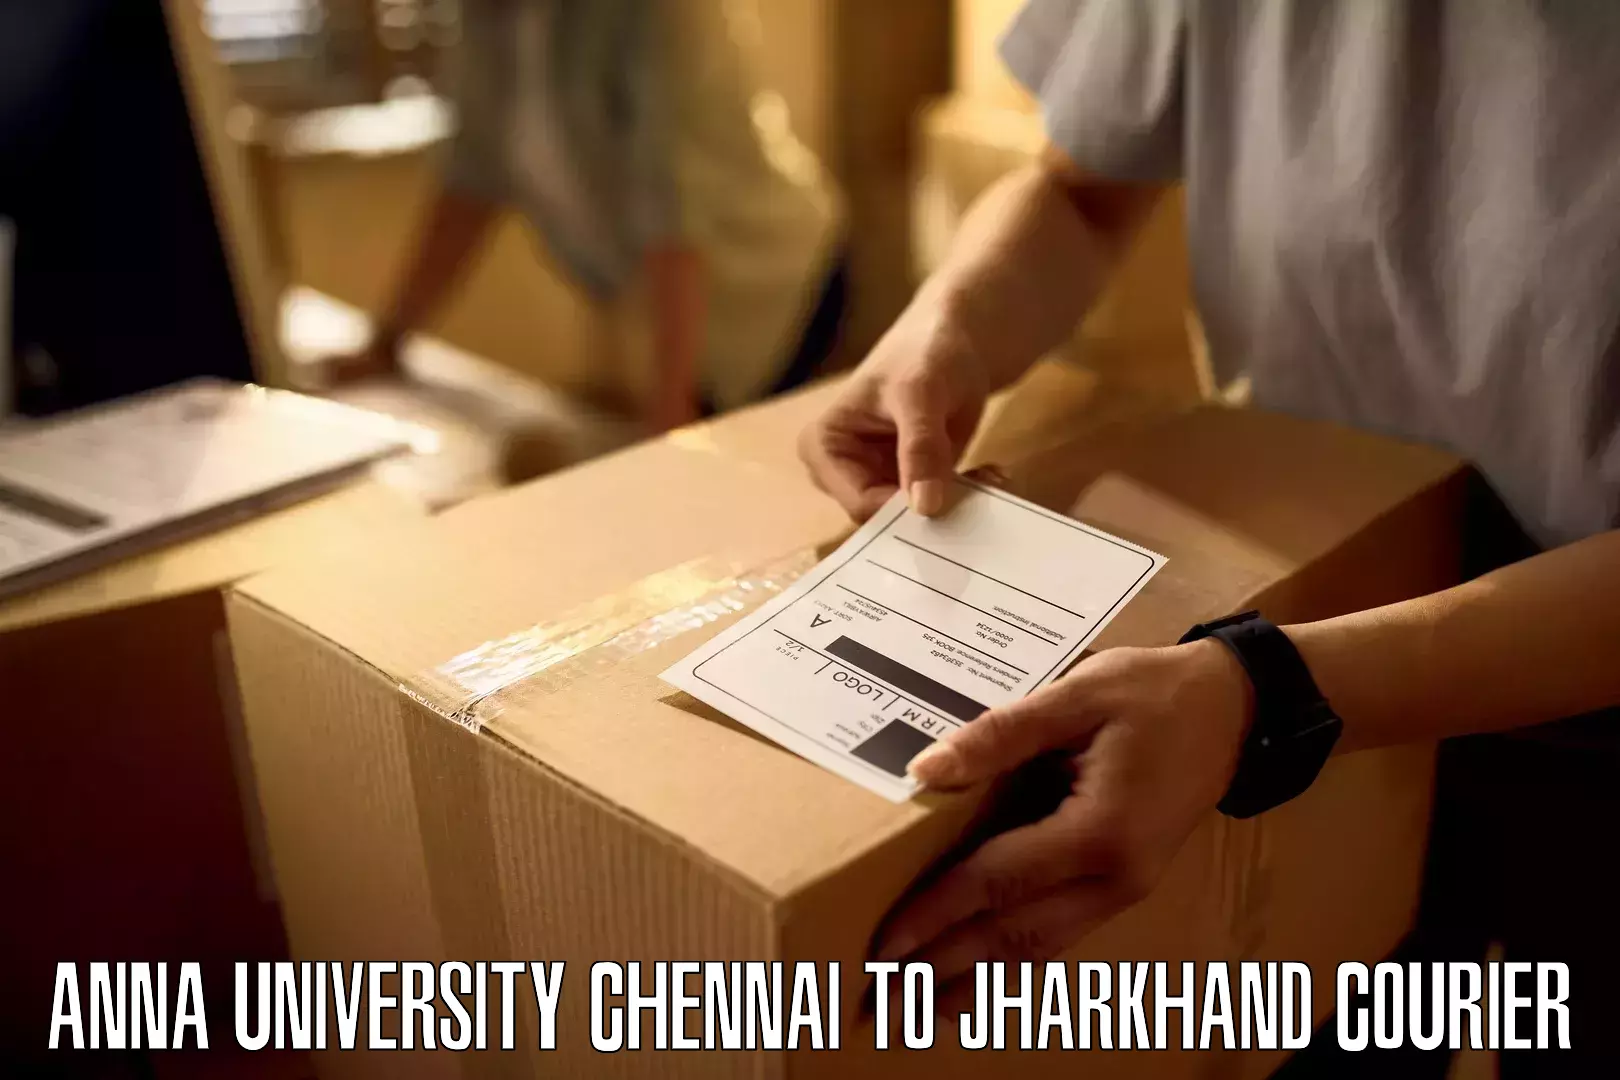 Courier service partnerships Anna University Chennai to Barharwa